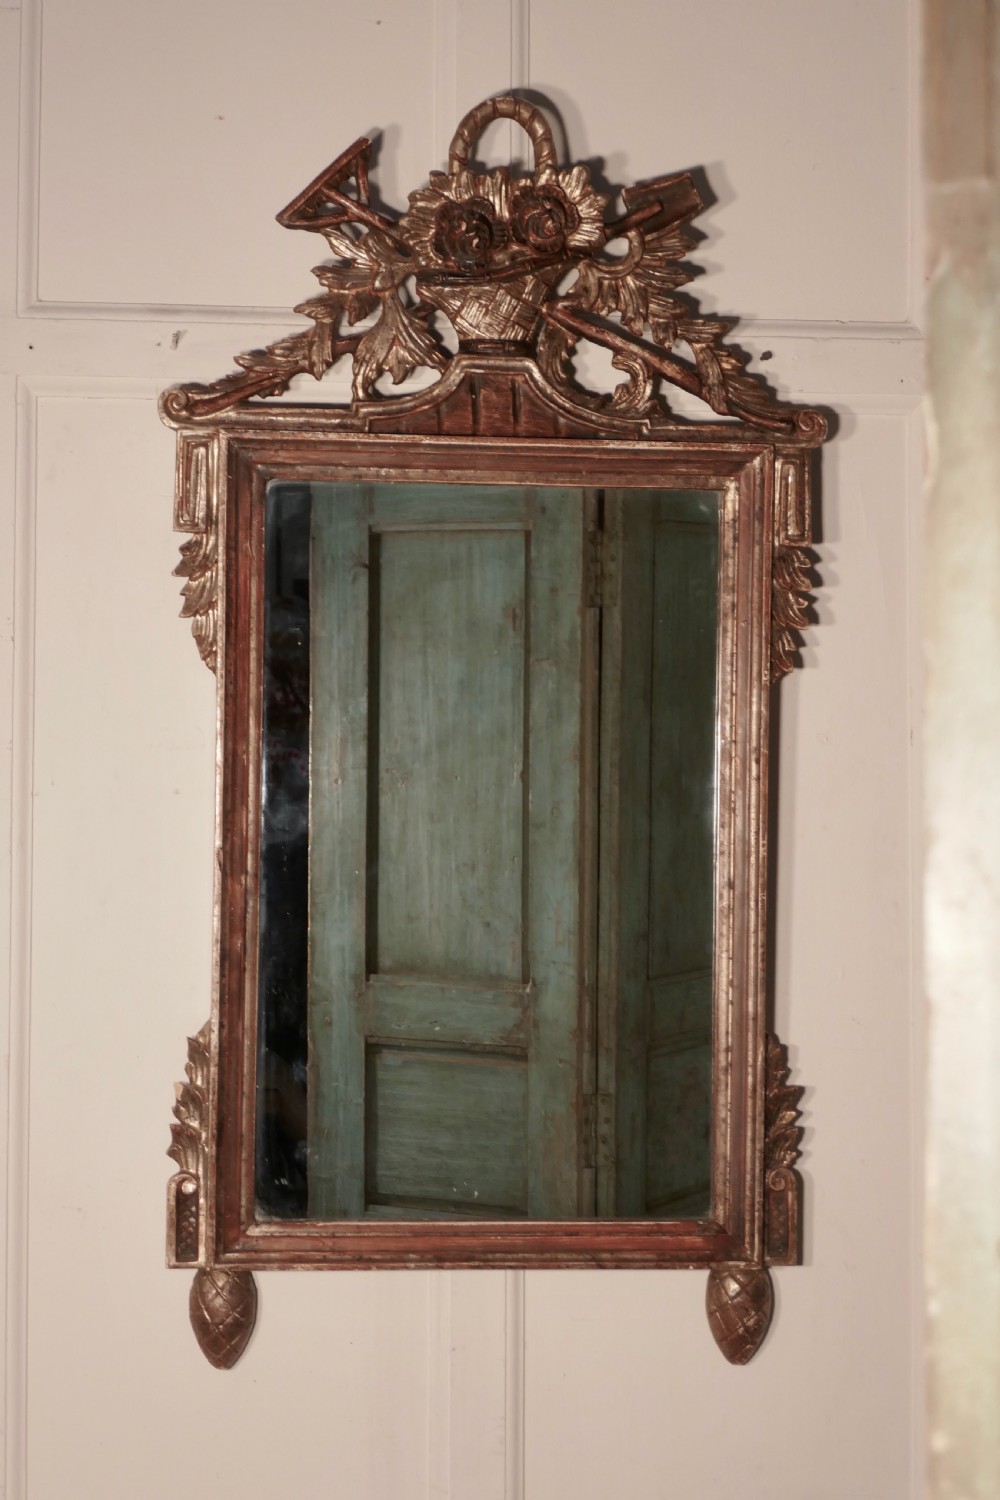 napoleon iii distressed faded wall mirror on a gardening theme